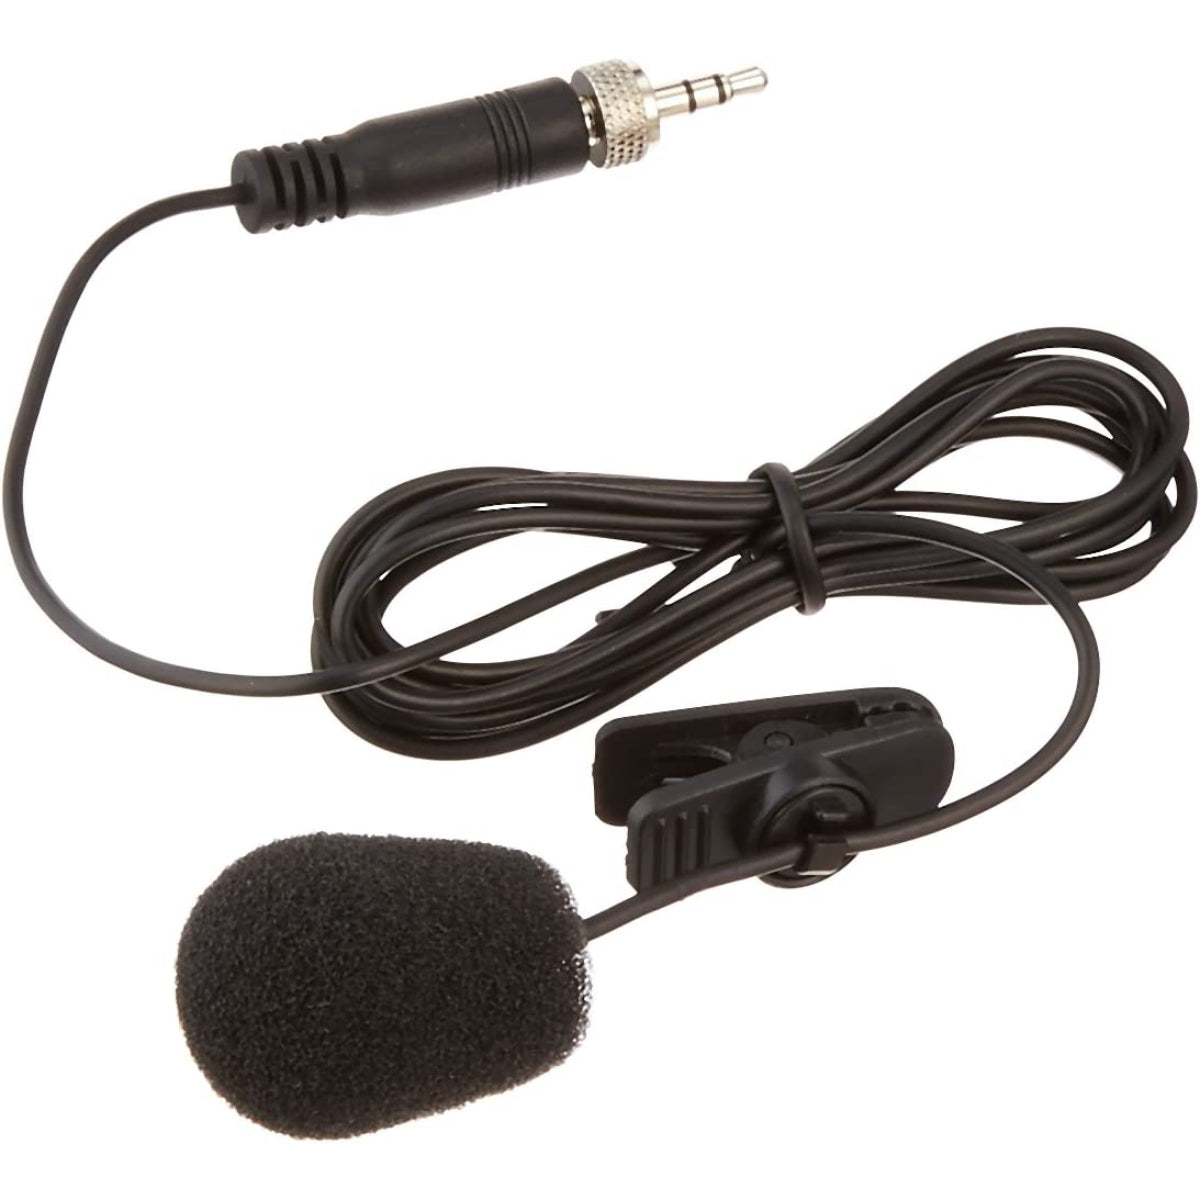 Sennheiser ME 4-N Electret Cardioid Lapel Microphone, For SK 100/300/500